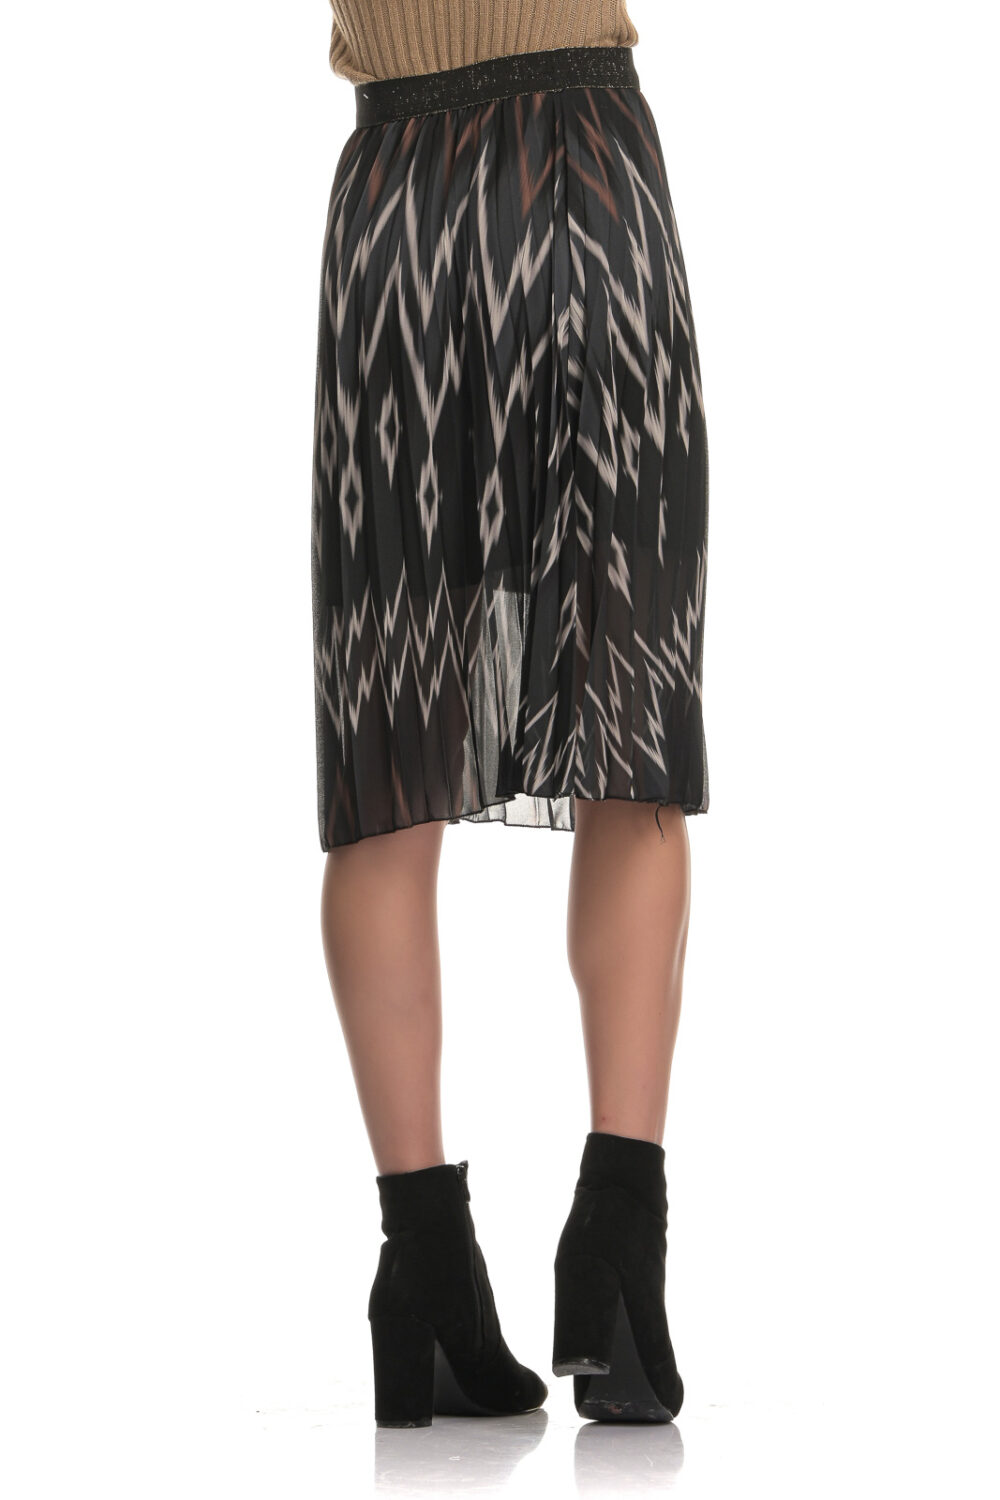 Leopard pleated skirt with beige-black elastic